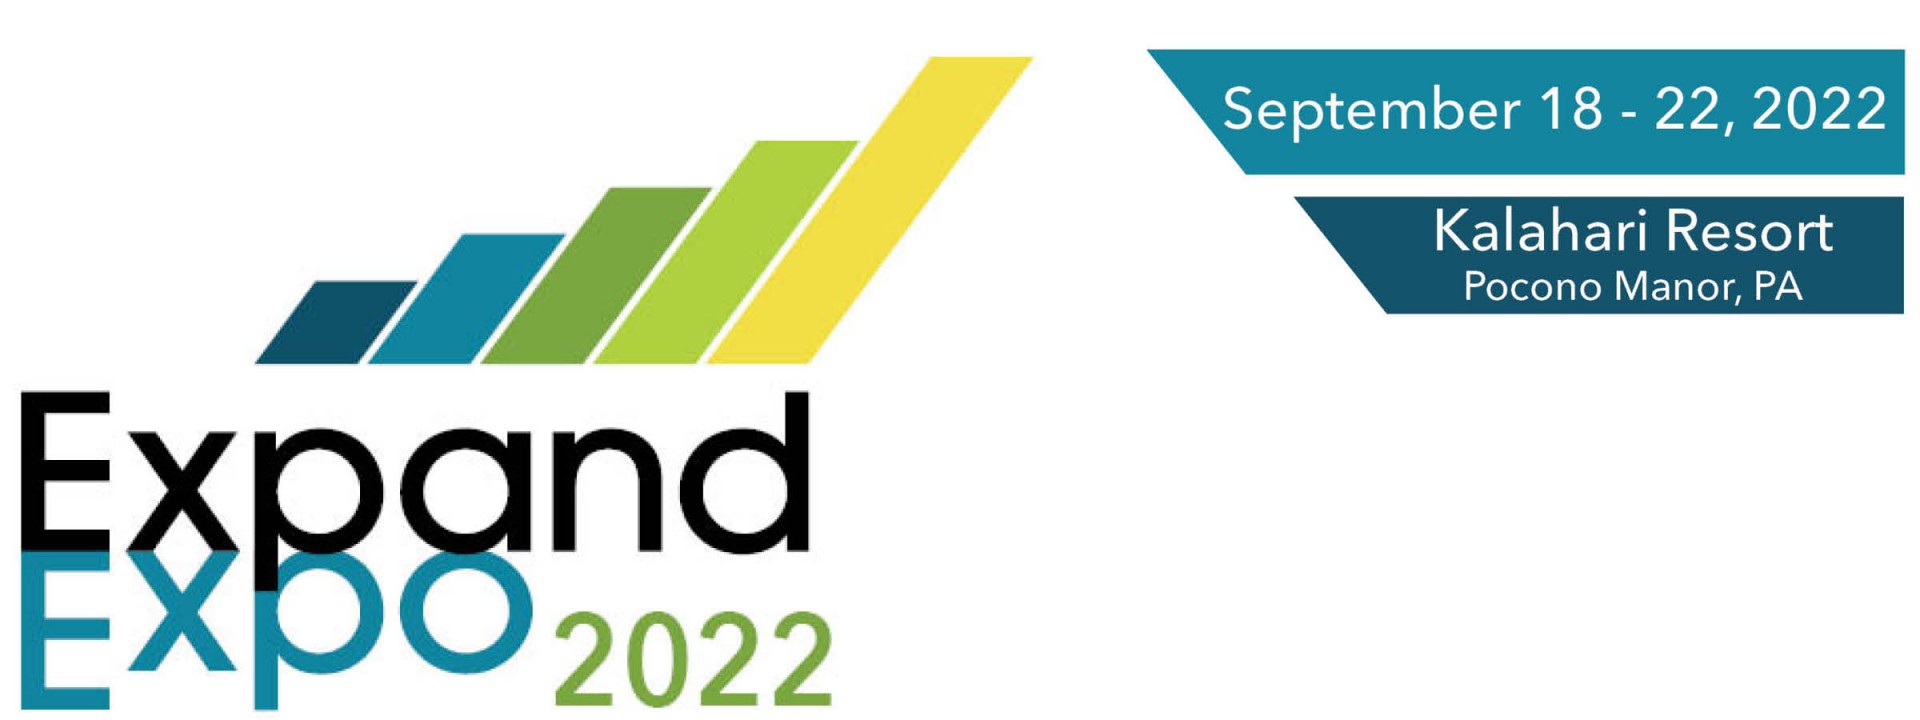 Expand Expo 2022 logo